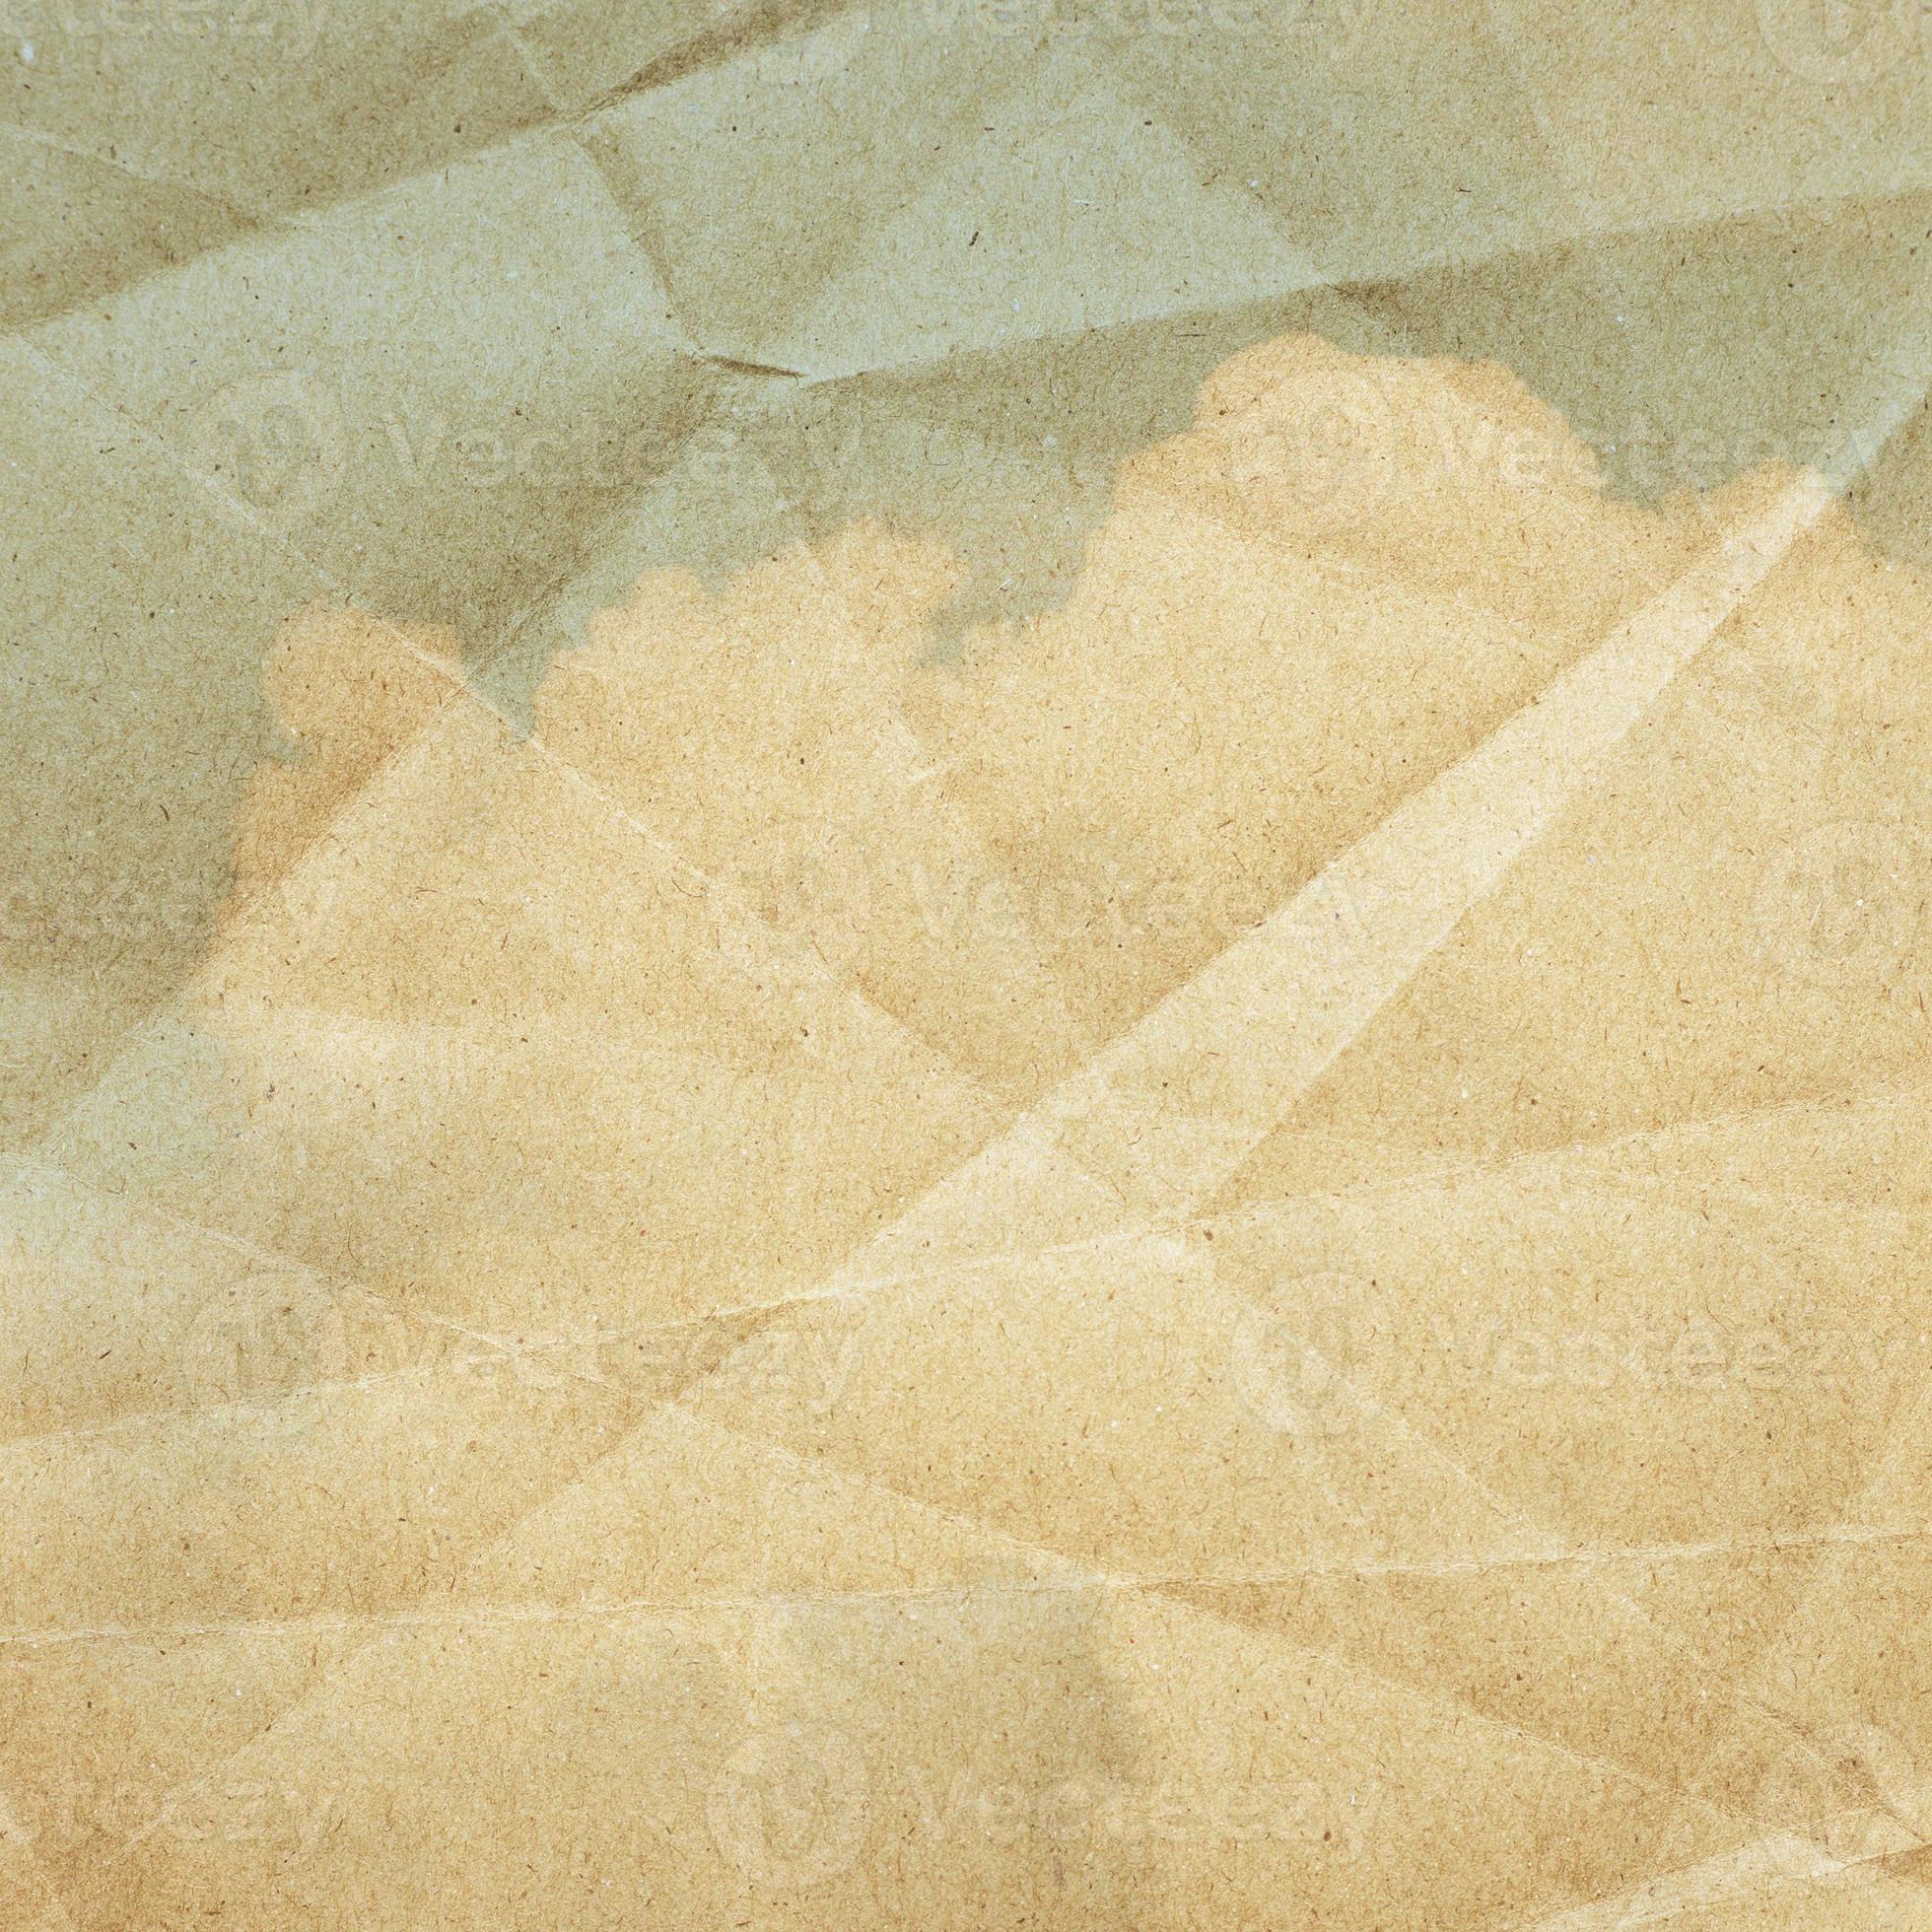 himmel moln på en texturerad, vintage papper bakgrund foto